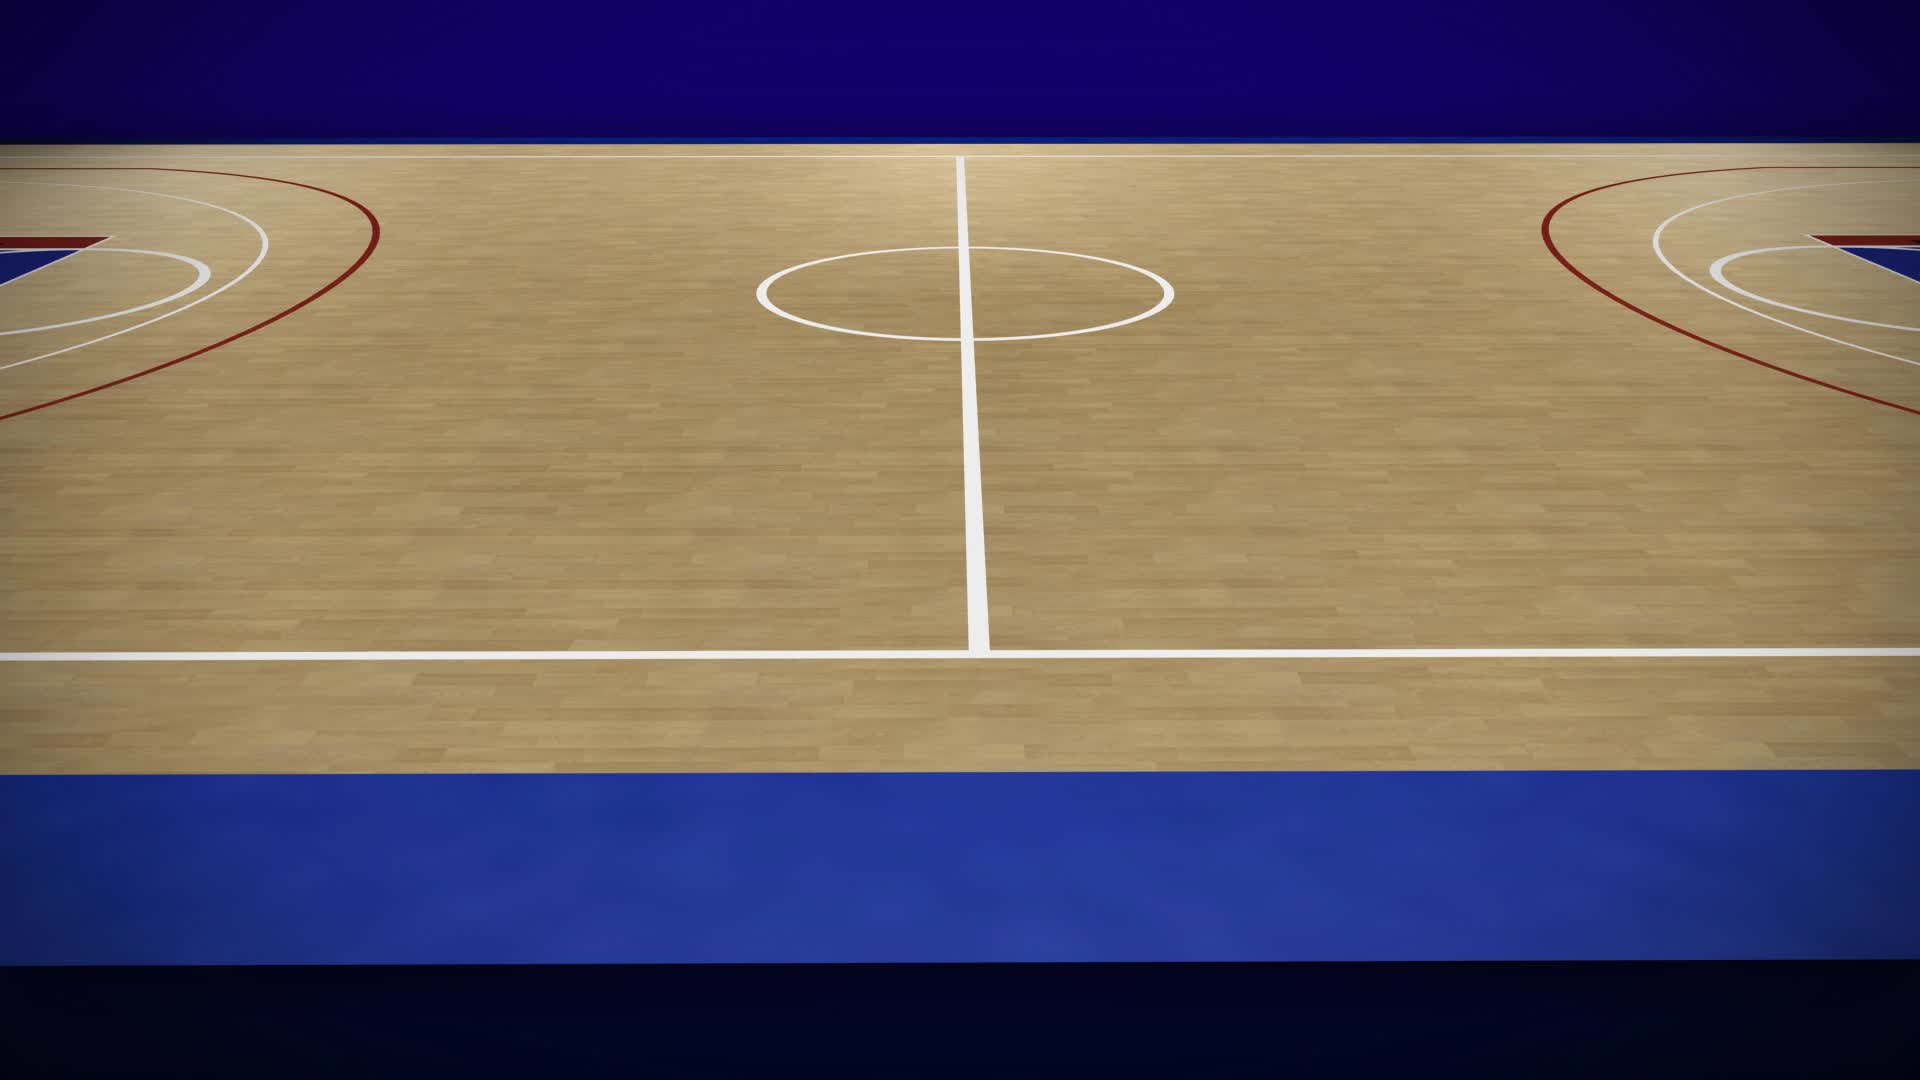 Basketball court animation ~ Stock Video #12268785 Pond5